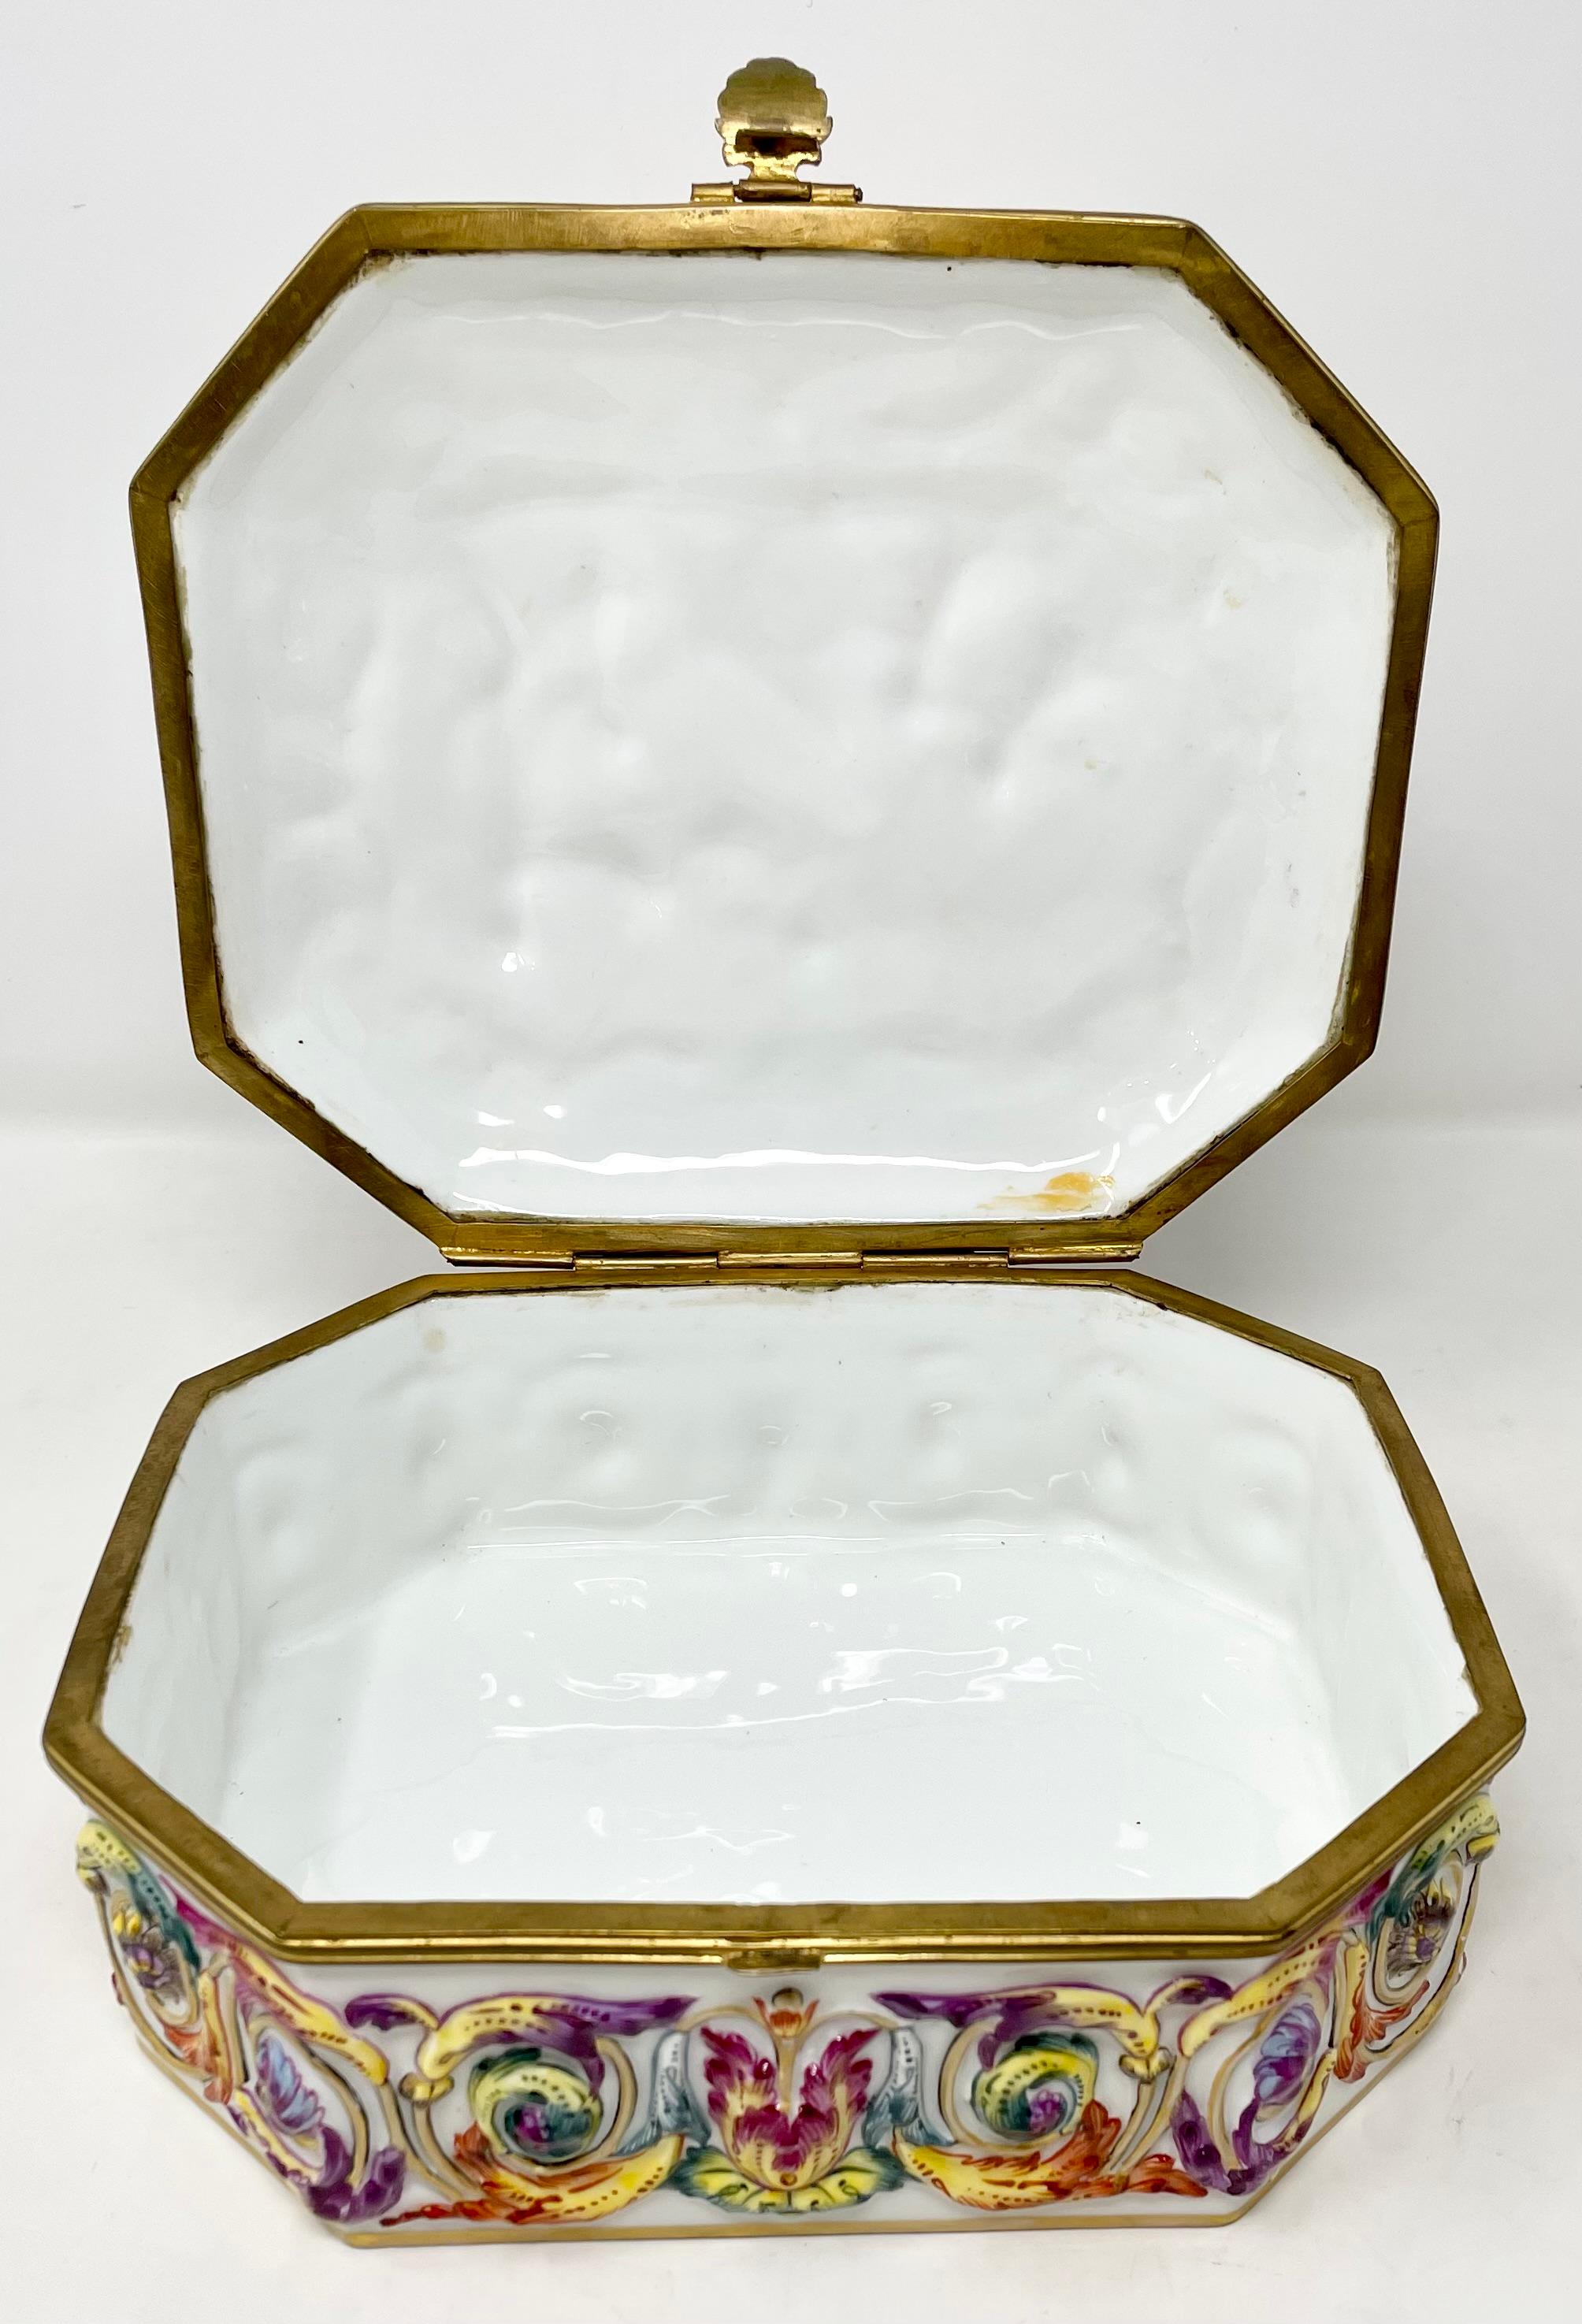 Antique Italian Capo di Monte Porcelain Hand-Painted Jewel Box, Circa 1900's For Sale 3